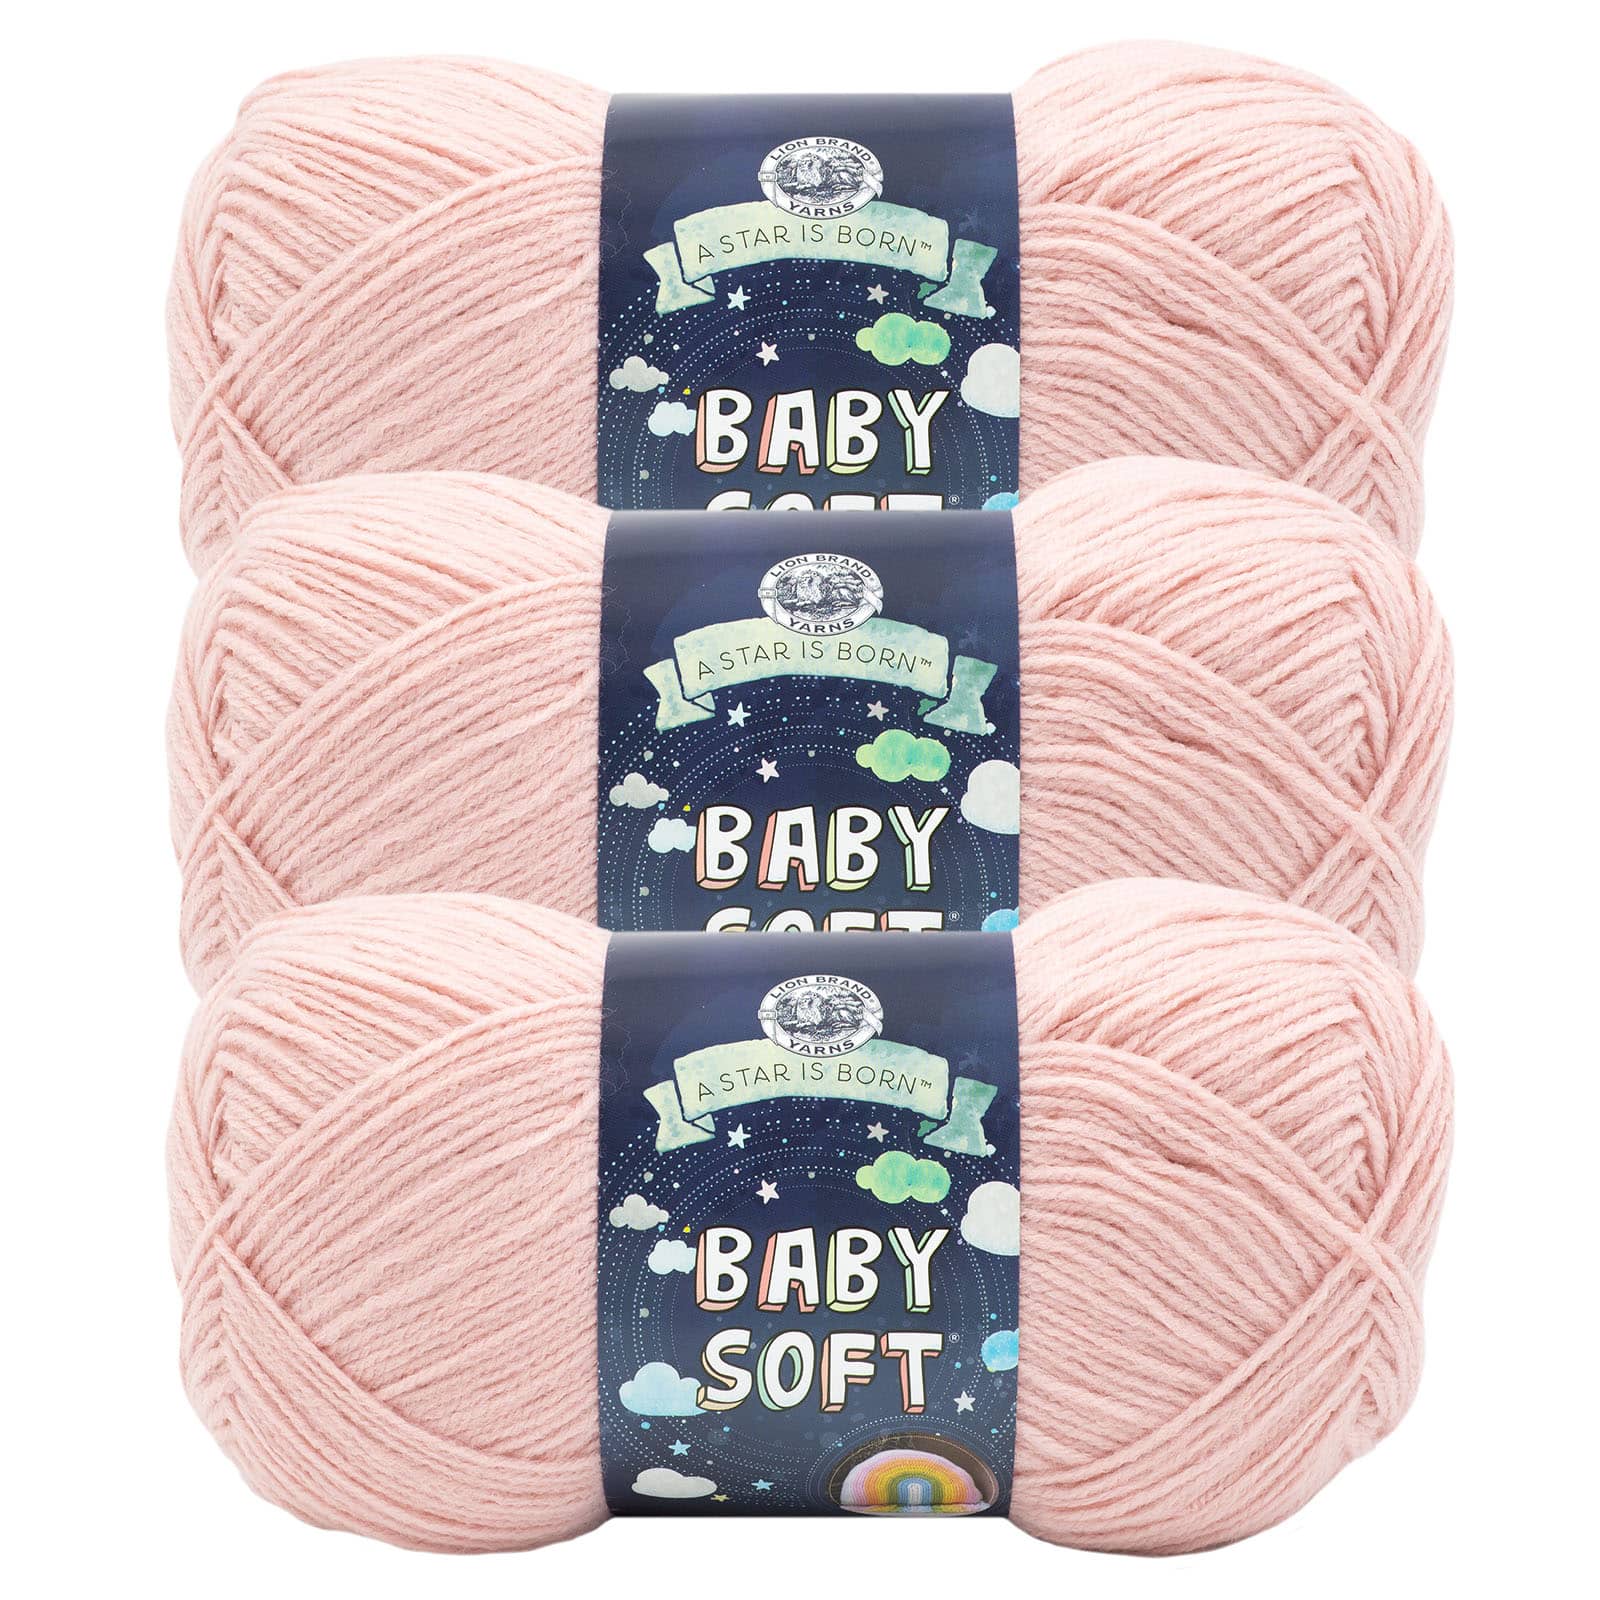 Lion Brand Baby Soft Yarn 3pk by Lion Brand